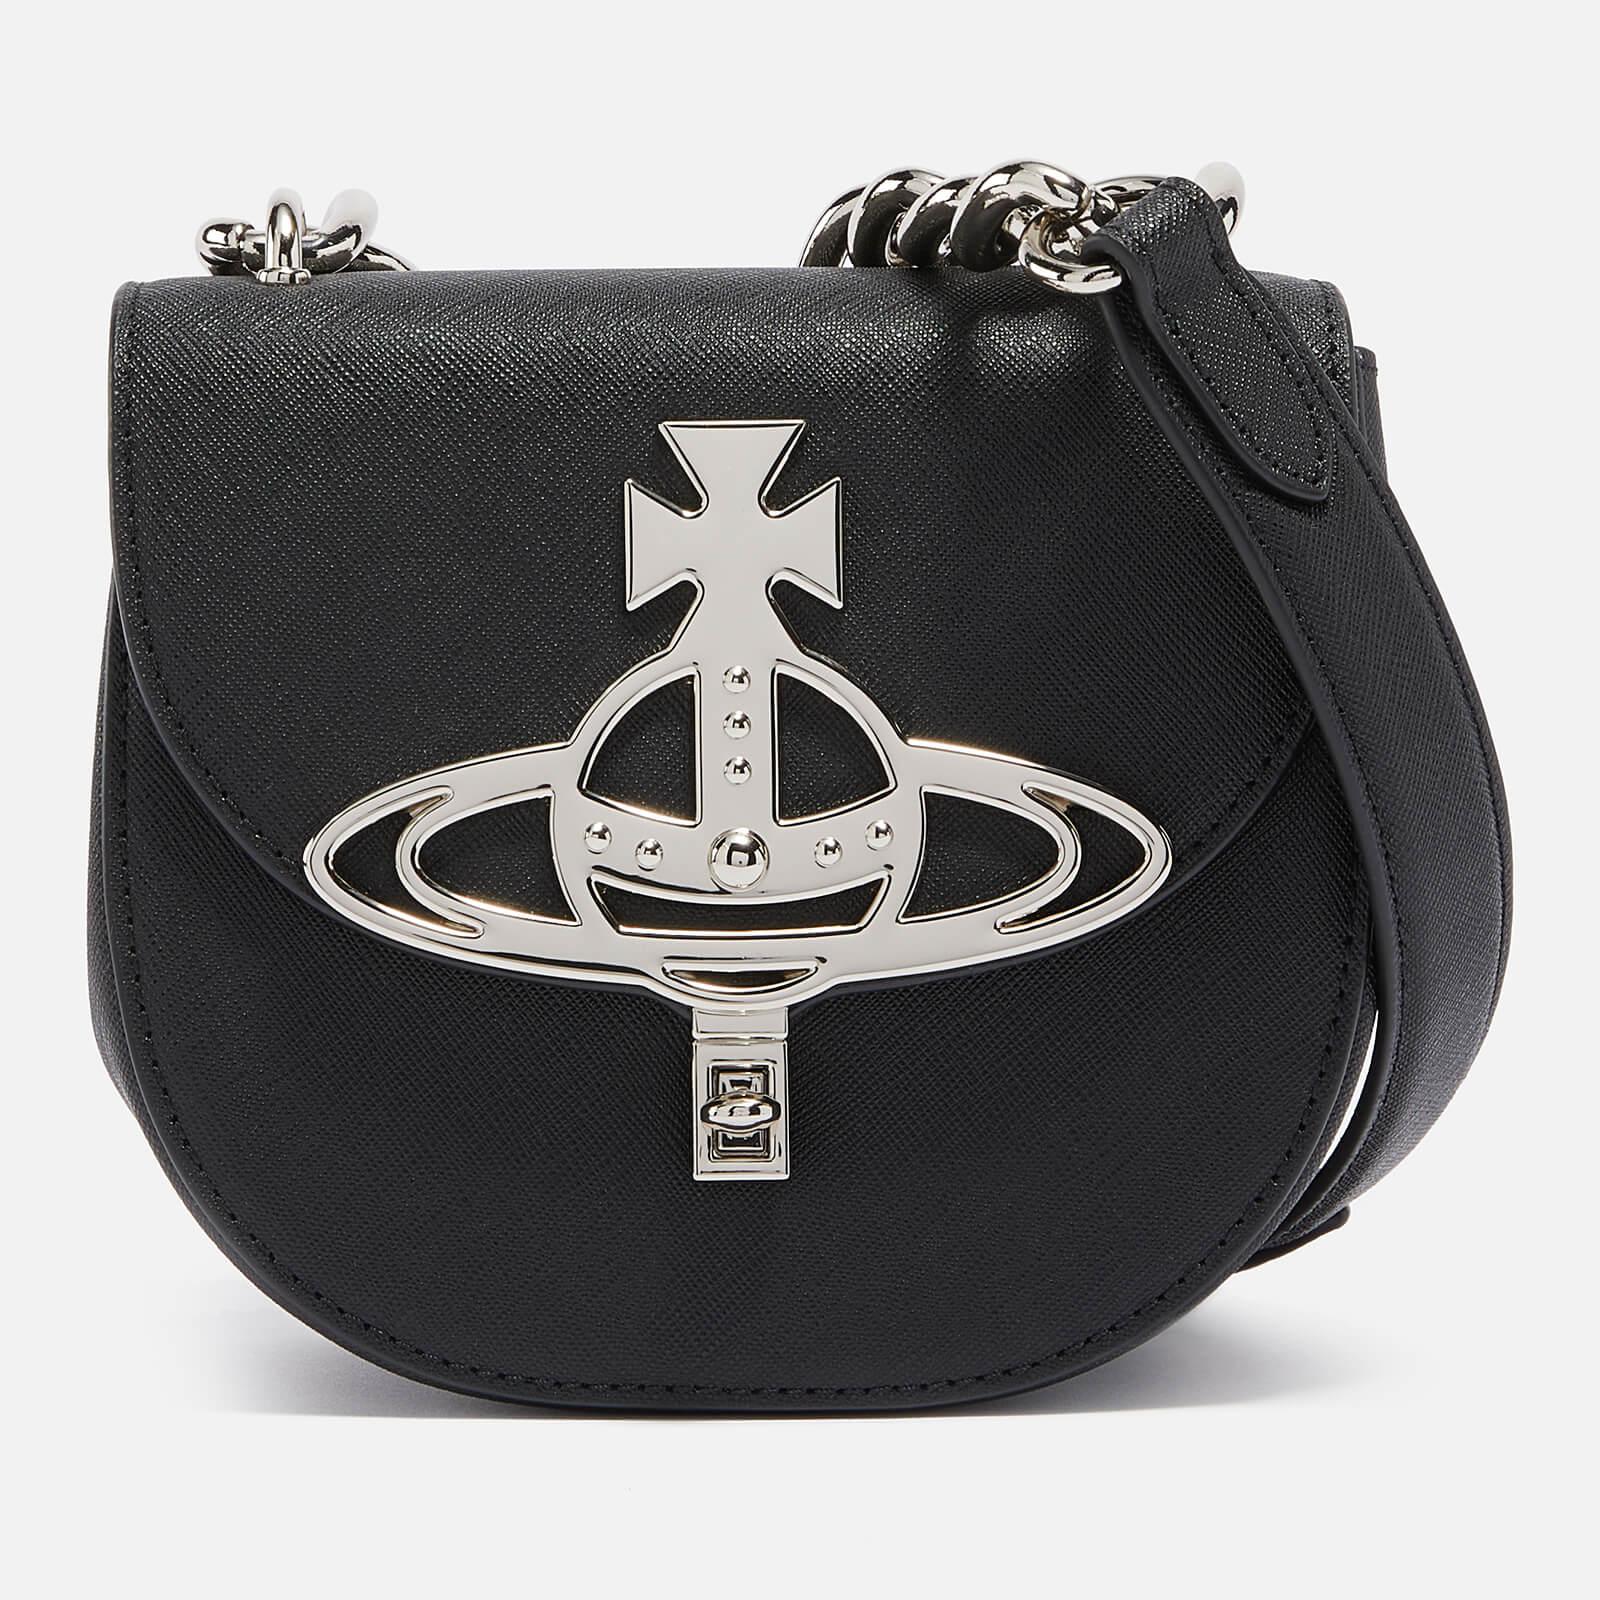 Vivienne Westwood Sofia Saffiano Leather Saddle Bag in Black | Lyst Canada